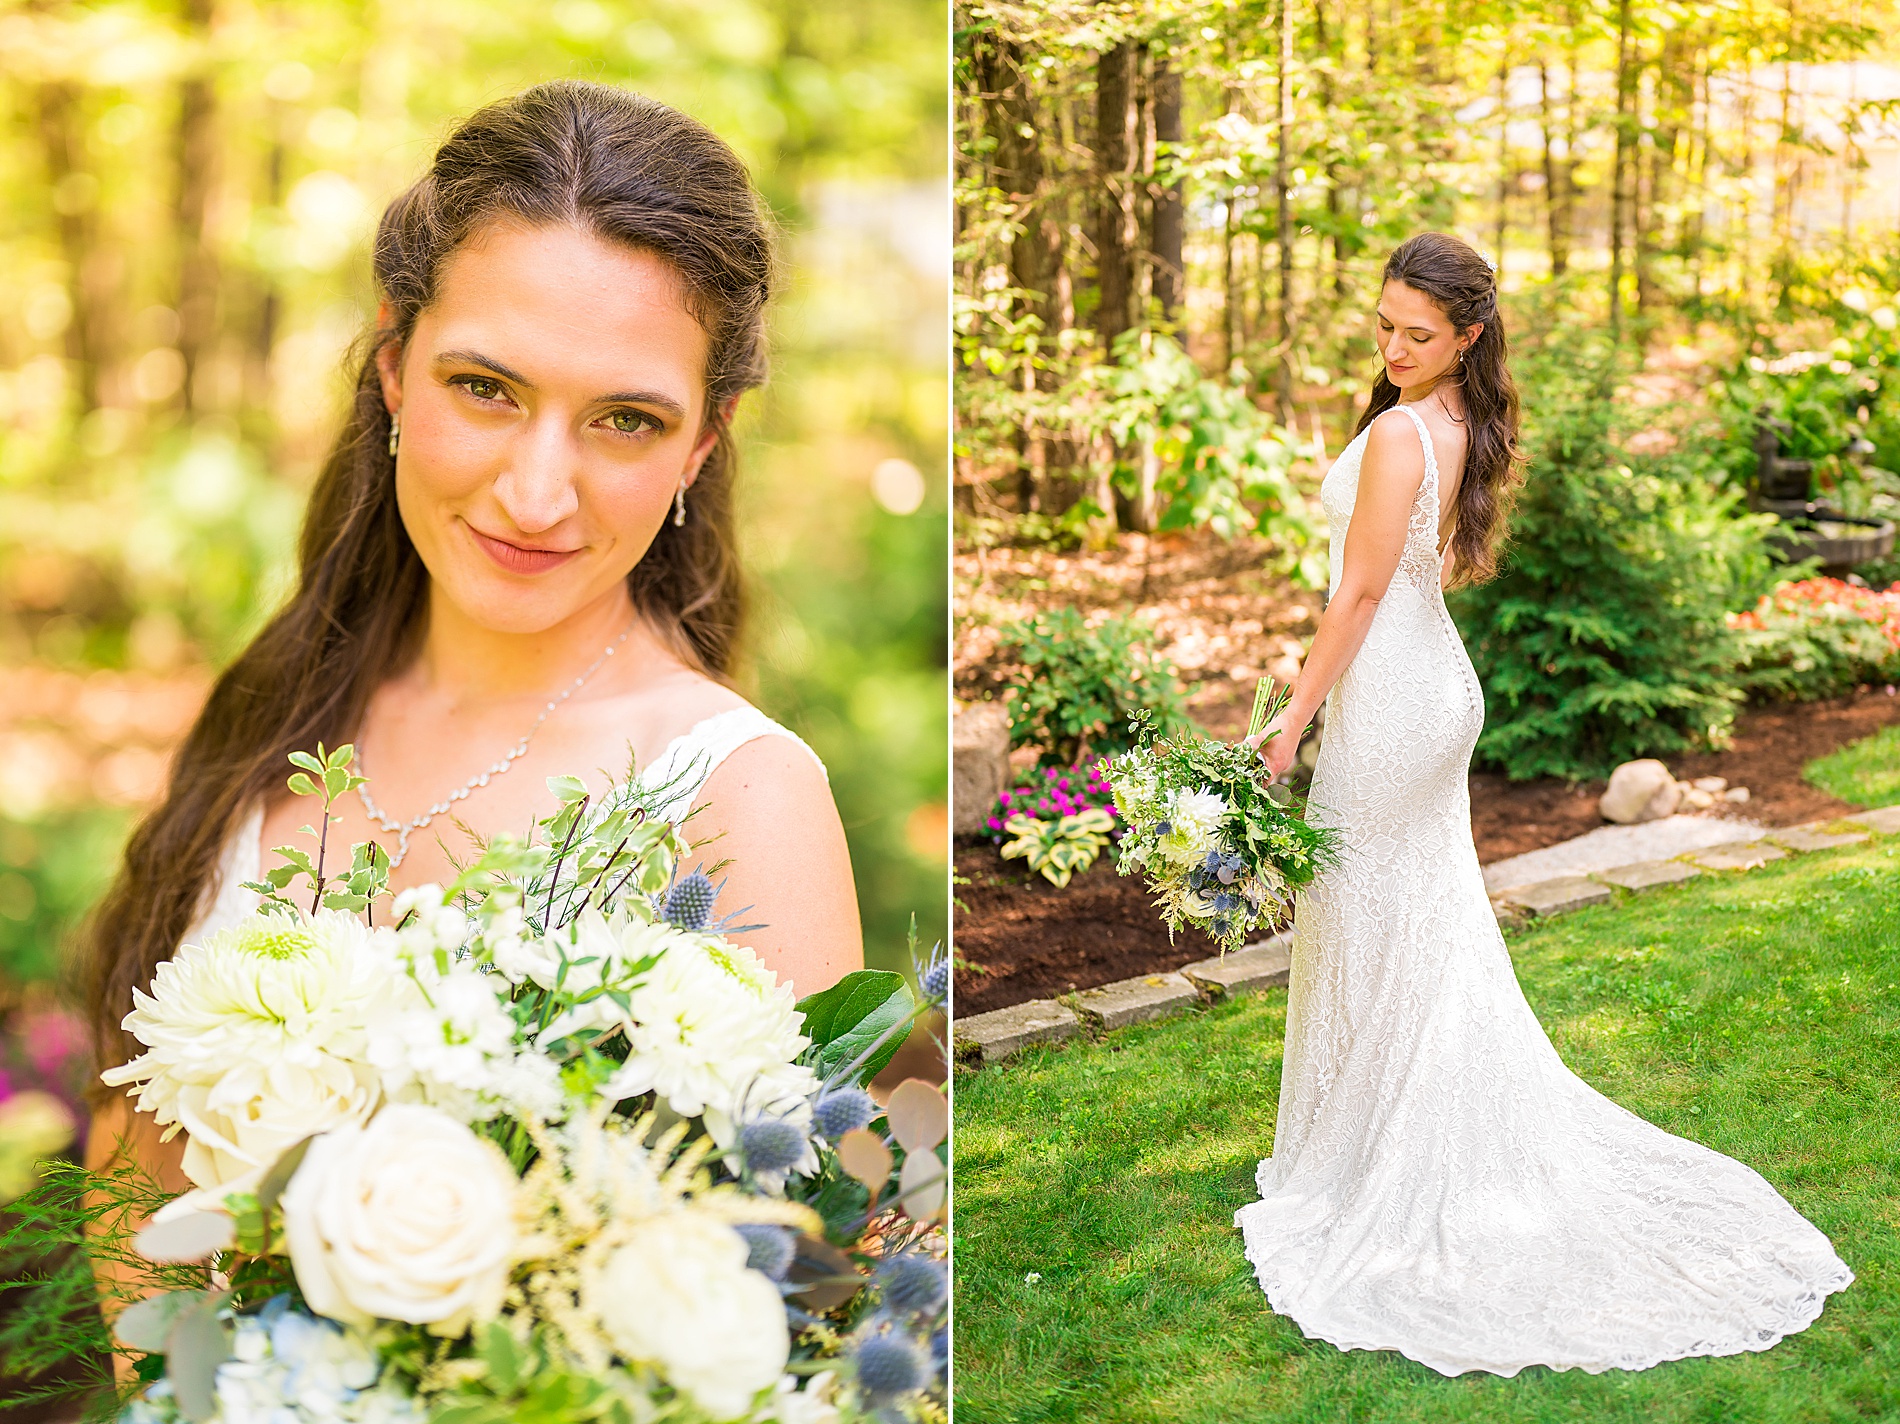 Bride wedding dress and bouquet